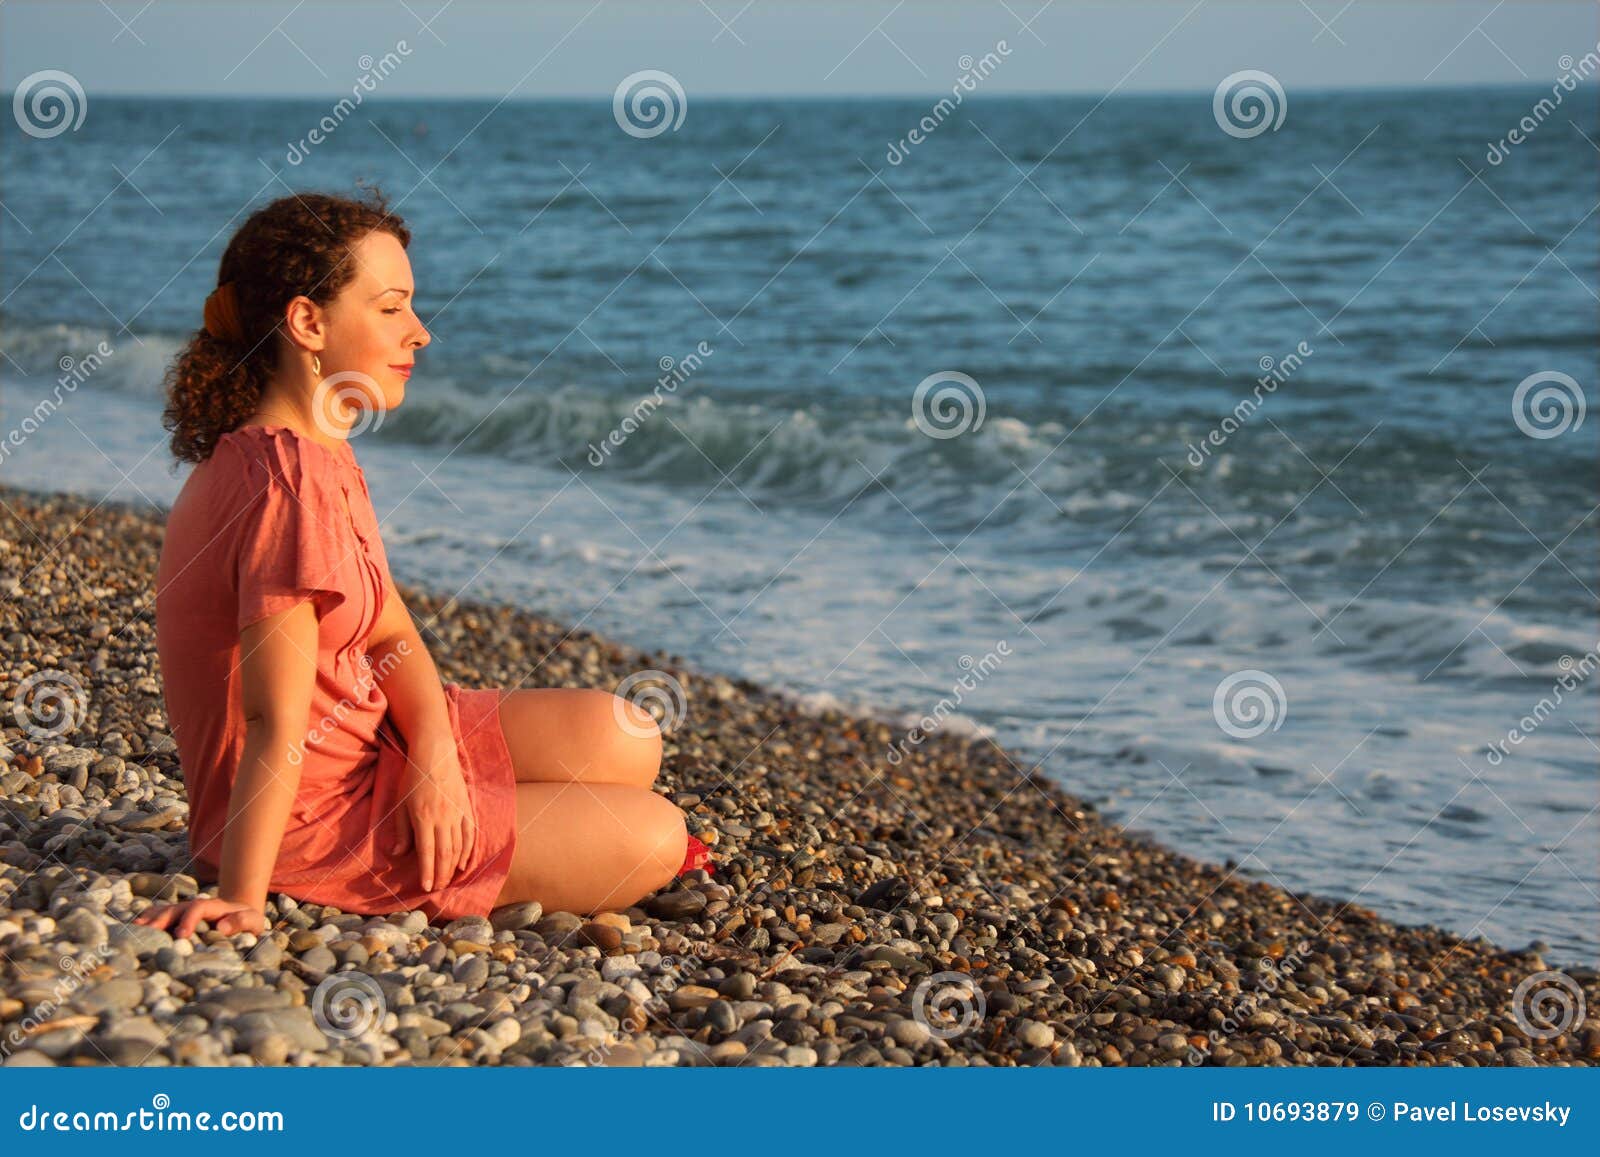 young woman sits ashore of sea